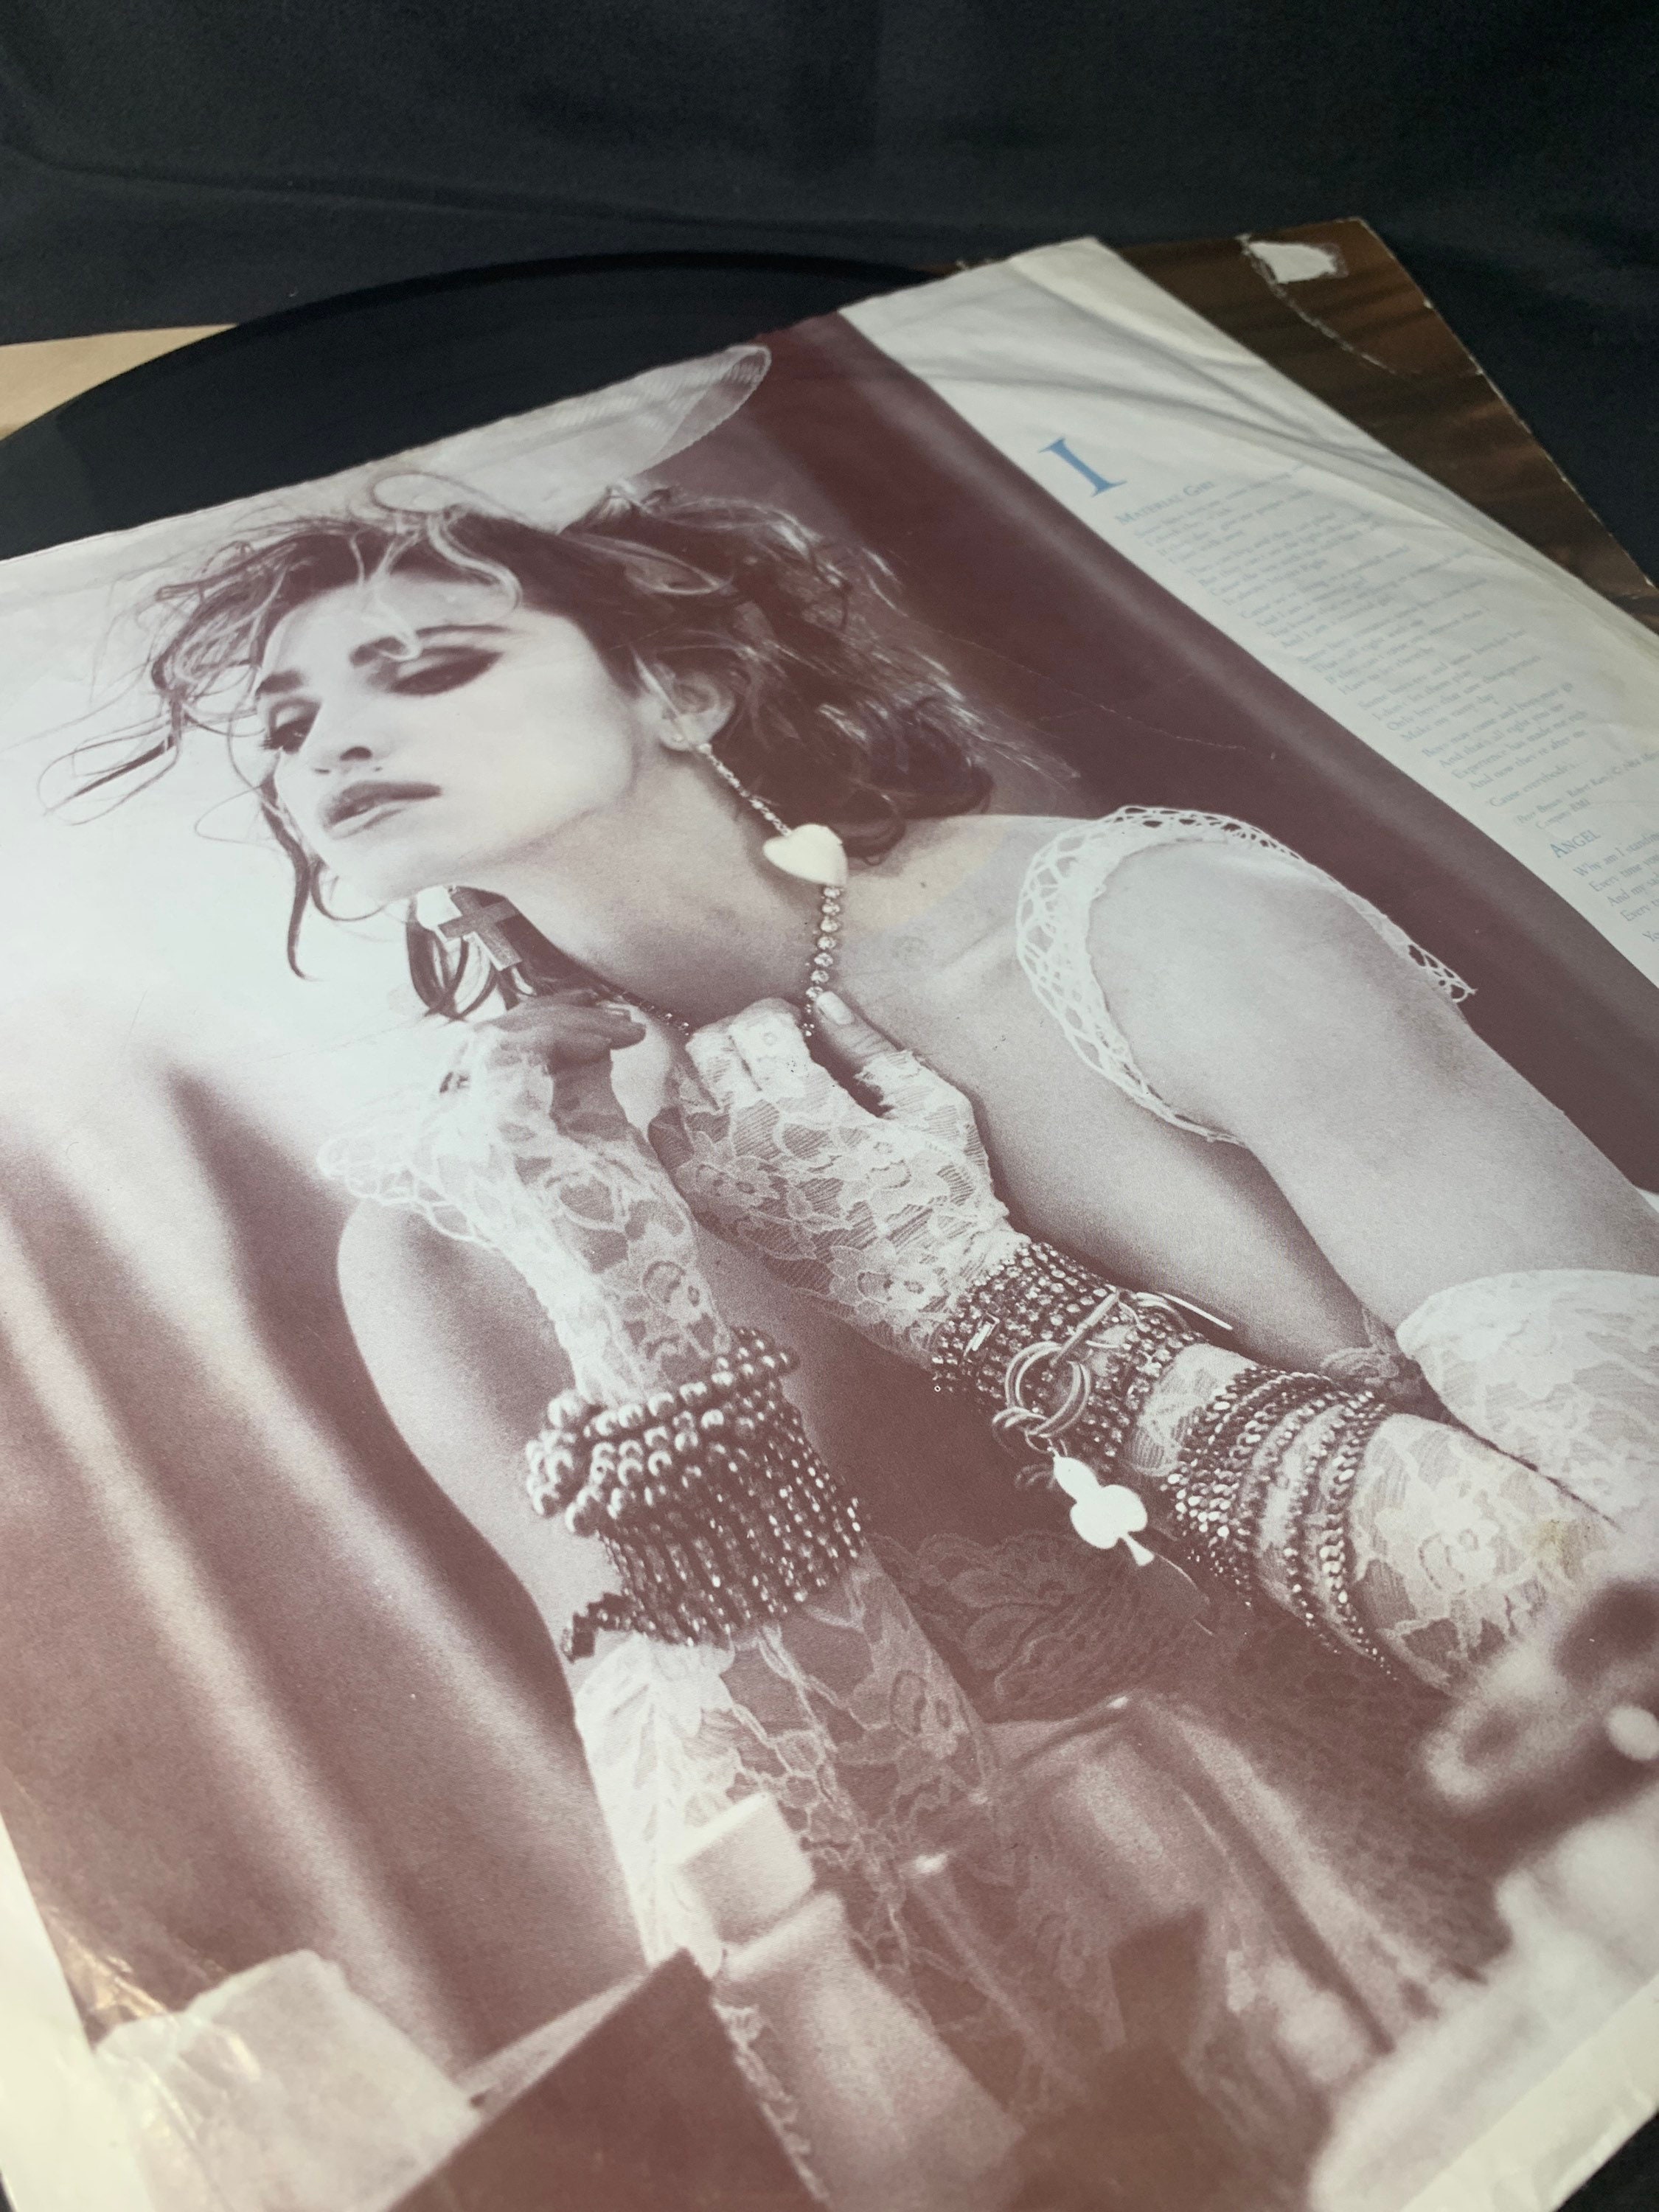 Madonna - Like A Virgin (Vinyl) – Del Bravo Record Shop